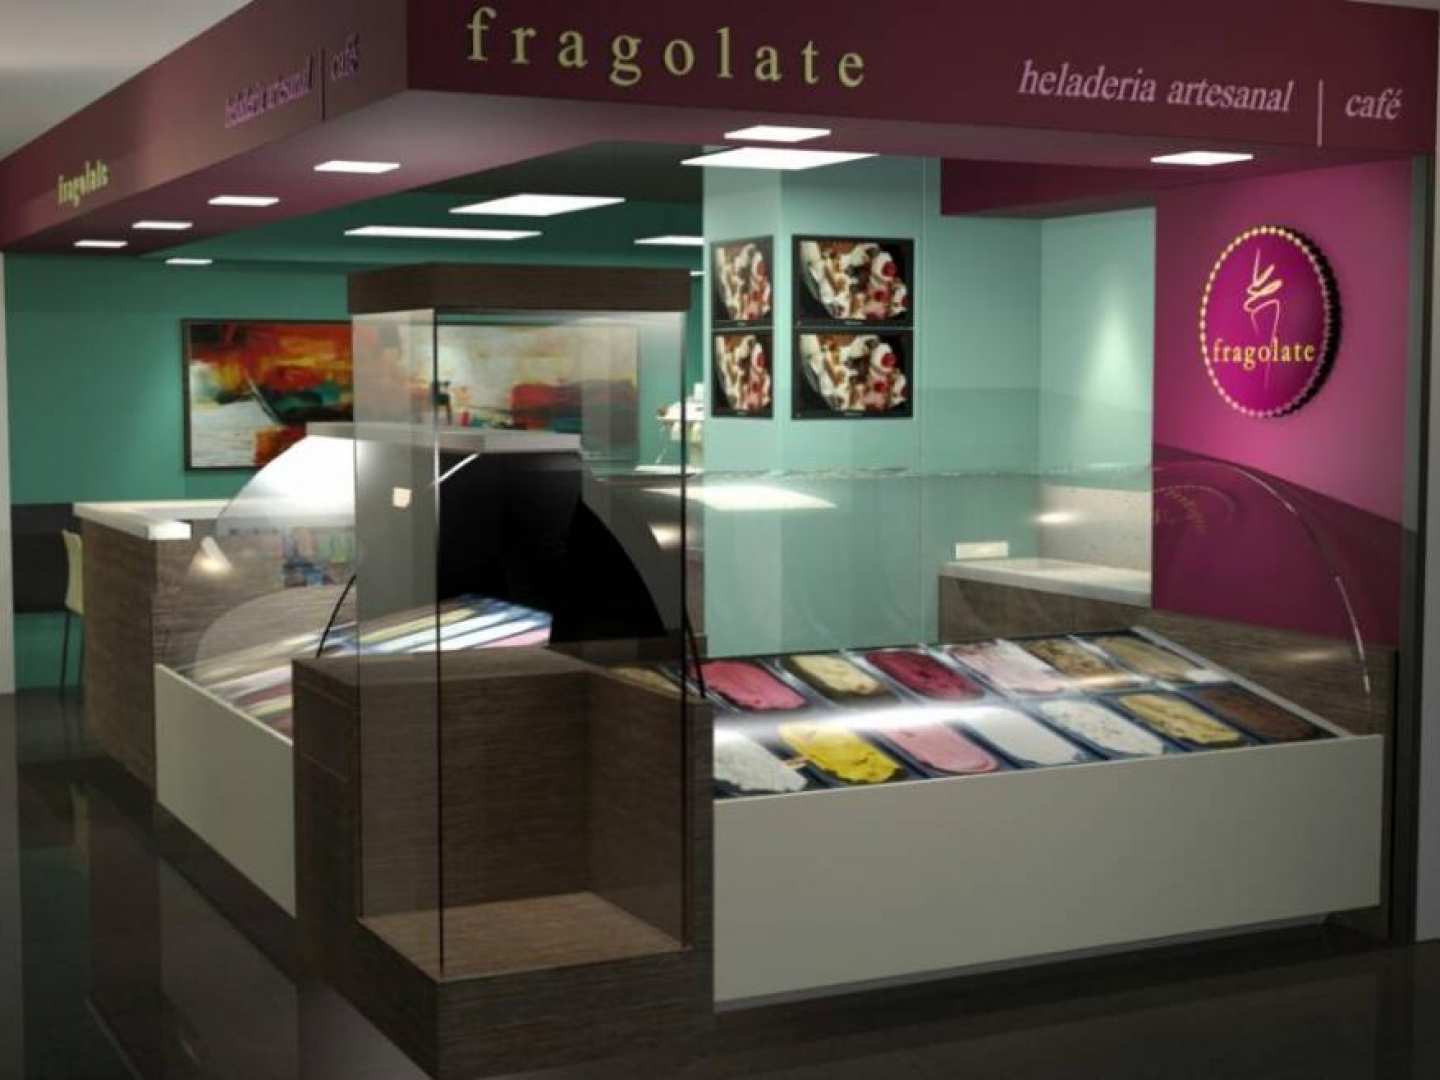 Fragolate (C. C. Metrocenter)